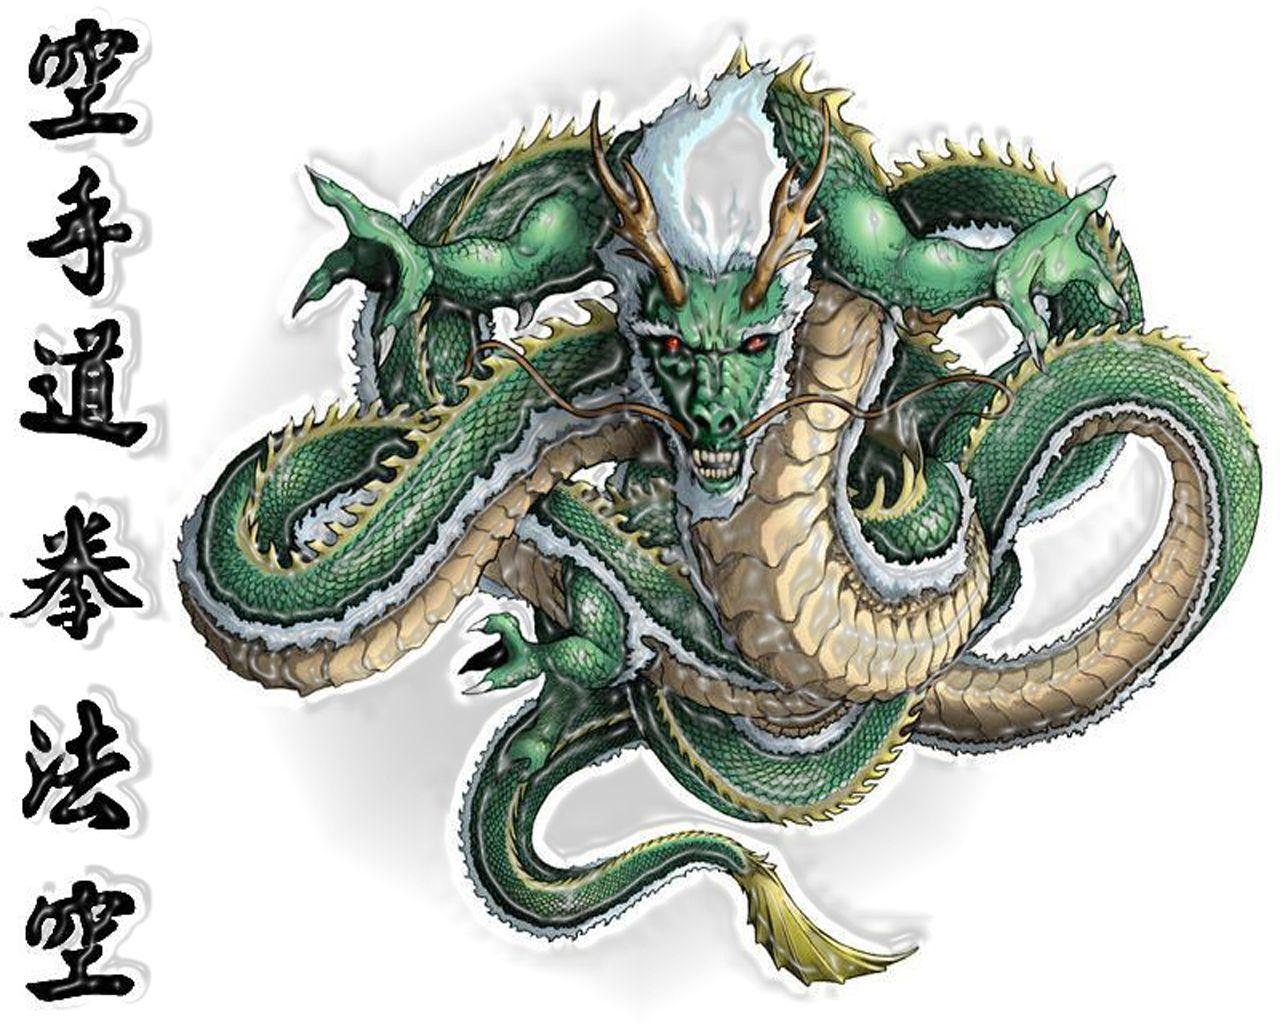 asian dragon image. Chinese Dragons wallpaper. Chinese Dragons